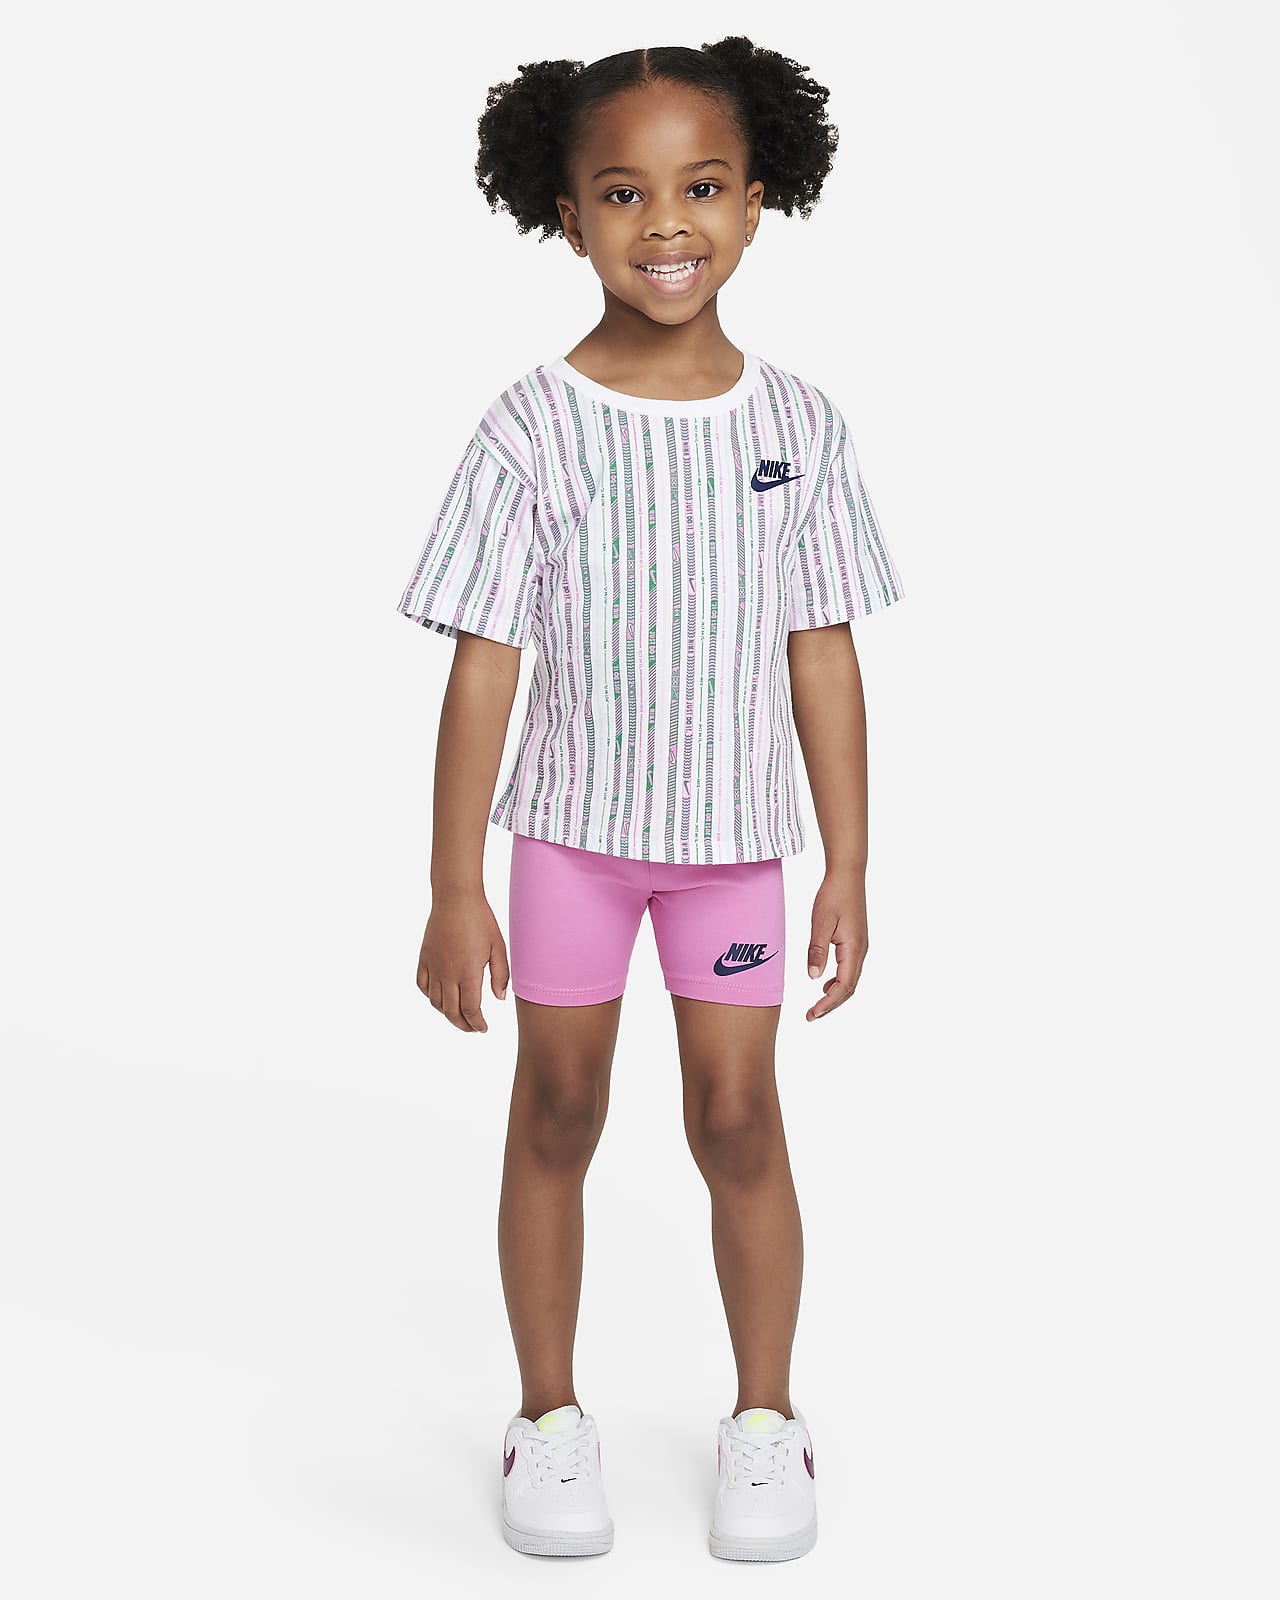 Nike Happy Camper Toddler Bike Shorts Set